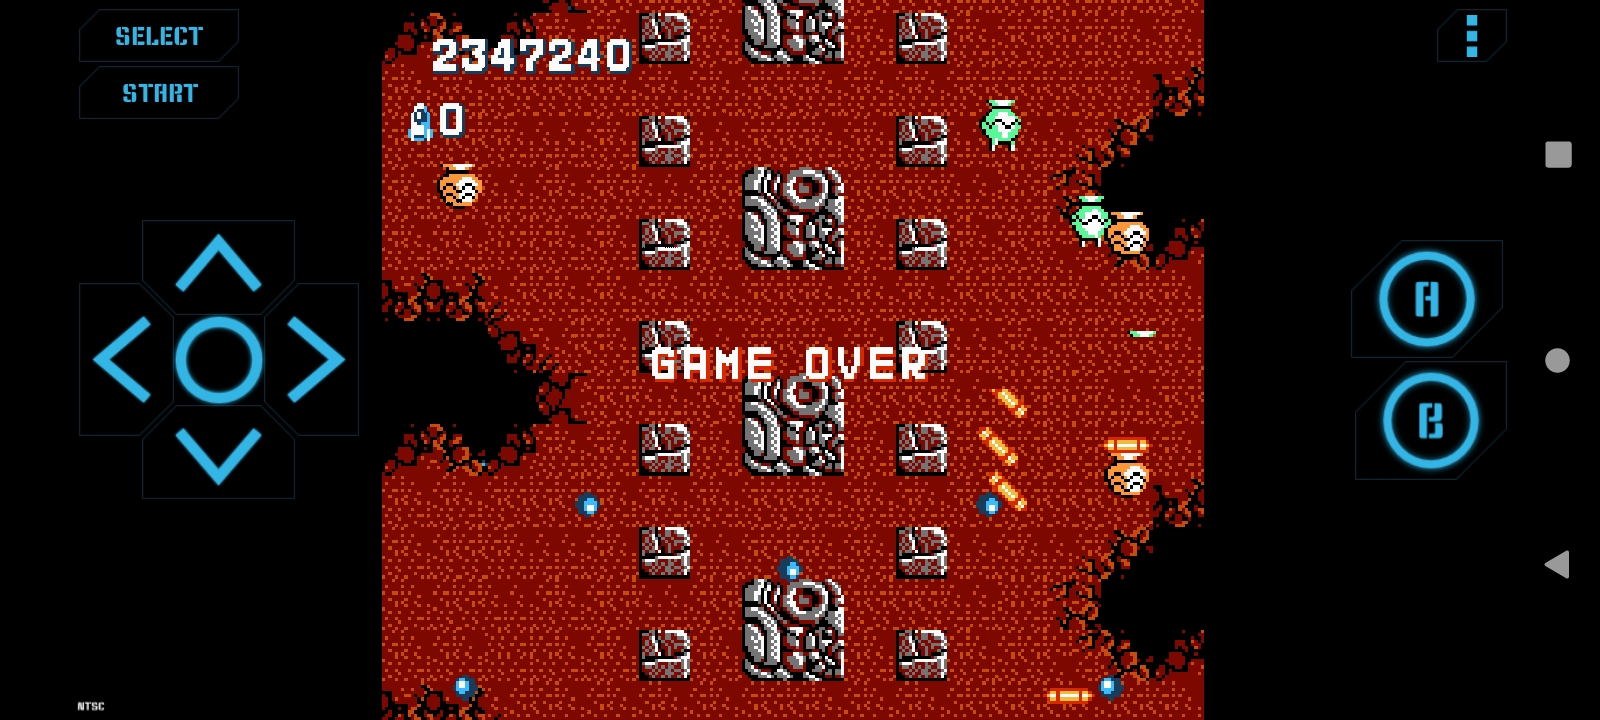 Hauntedprogram: Gun-Nac (NES/Famicom Emulated) 2,347,240 points on 2022-11-09 07:08:59